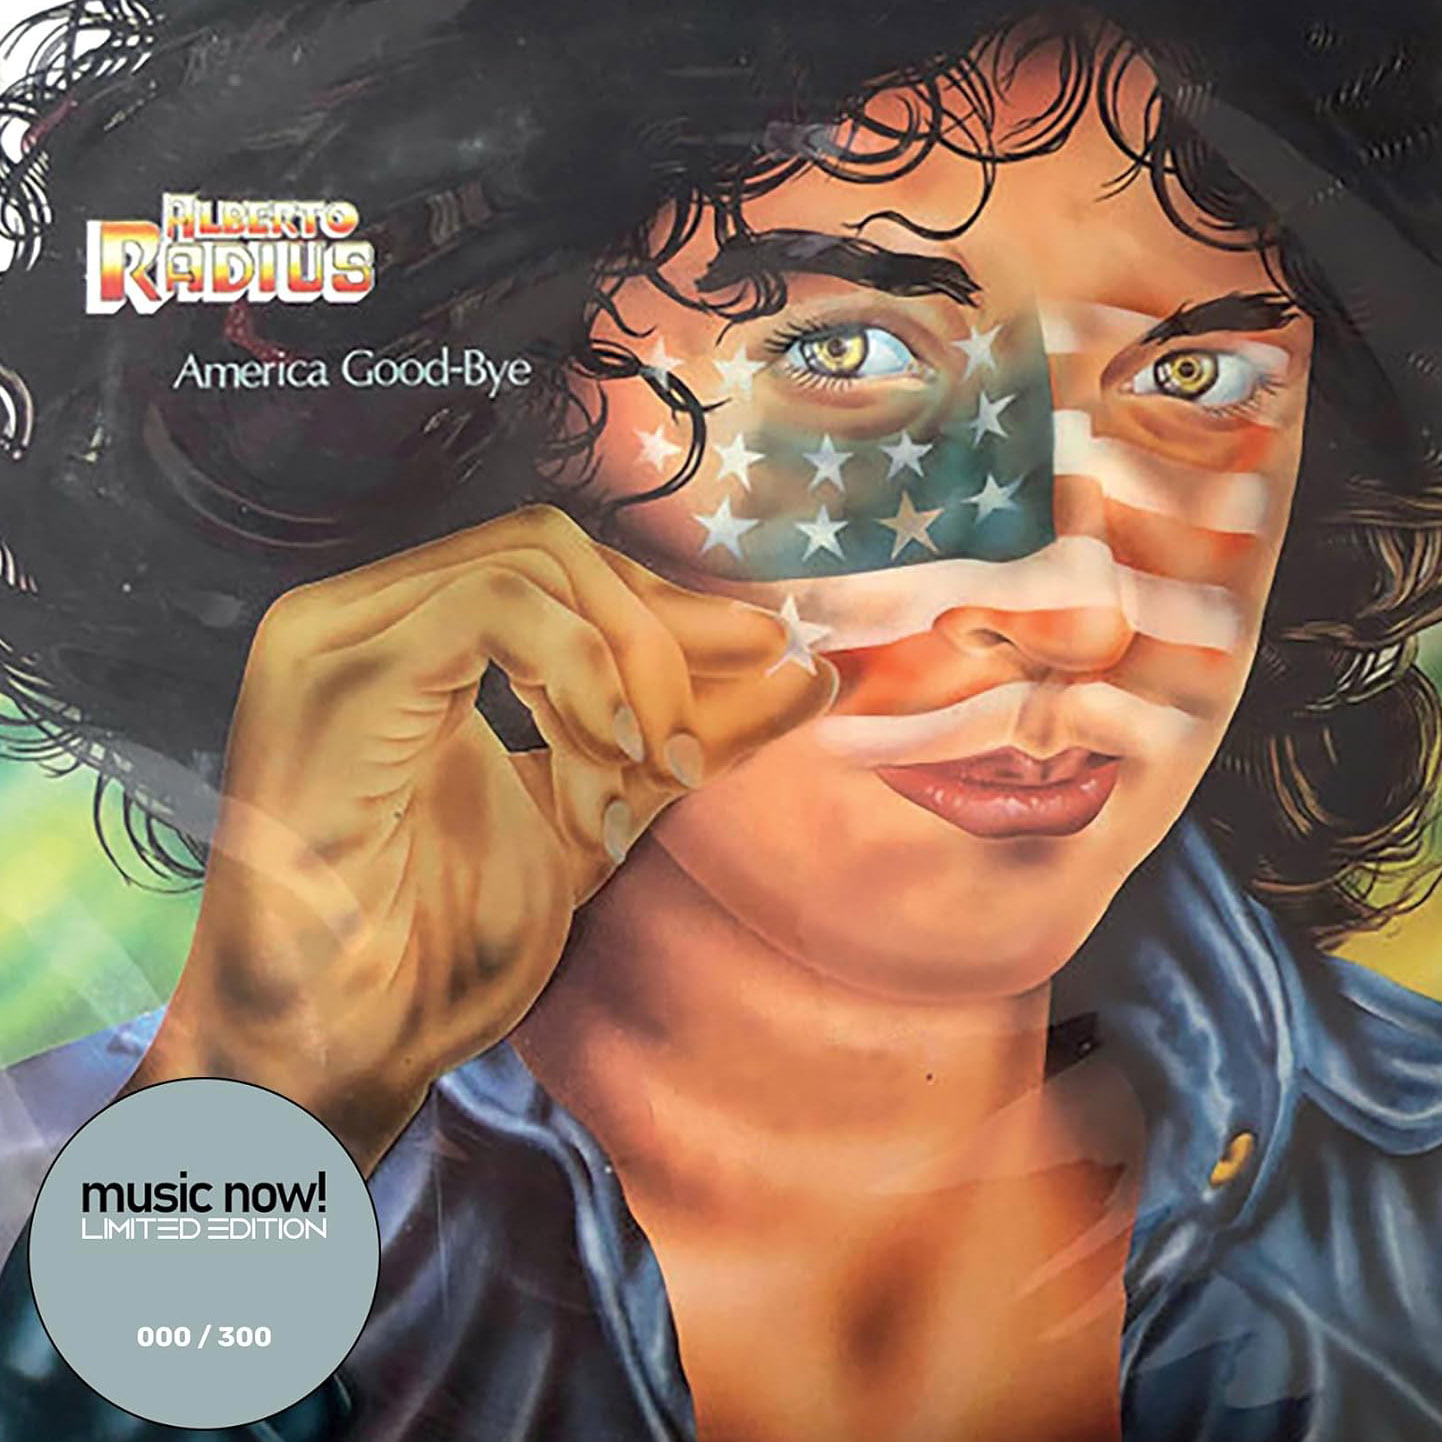 Copertina Vinile 33 giri America Good-Bye di Alberto Radius